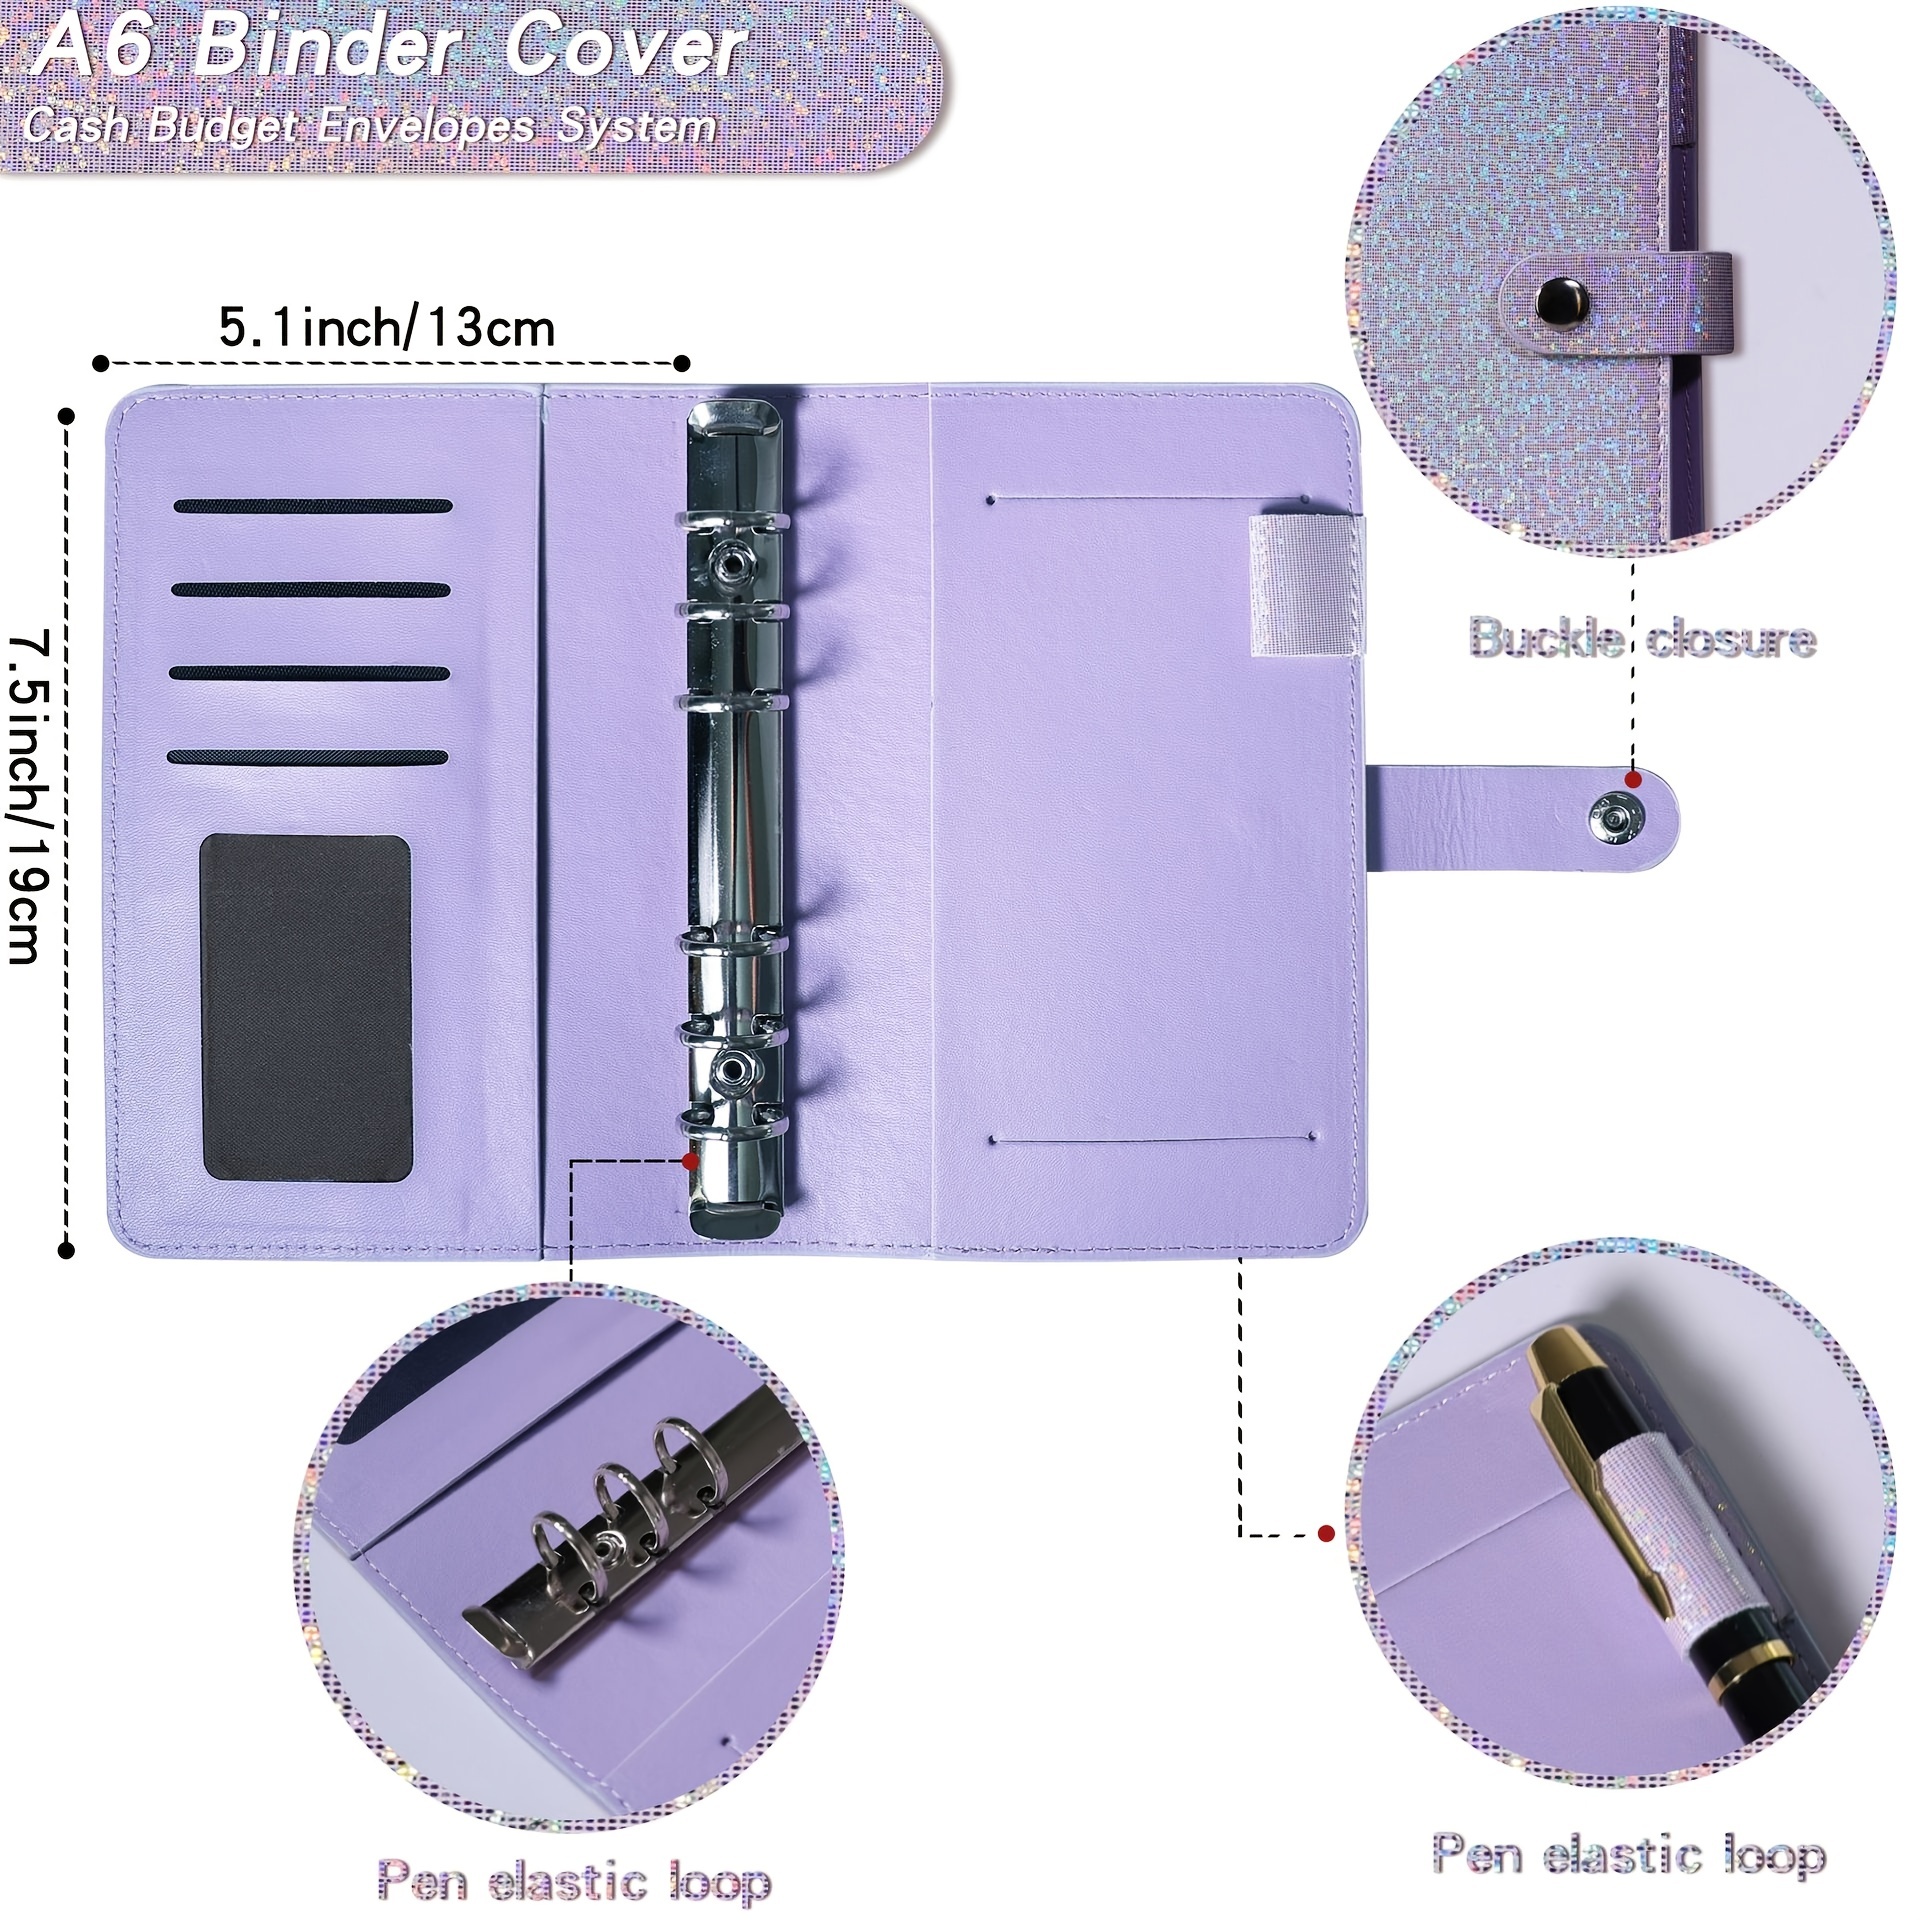 Custom PU Leather Budget Binder With 10pcs Zipper Envelopes